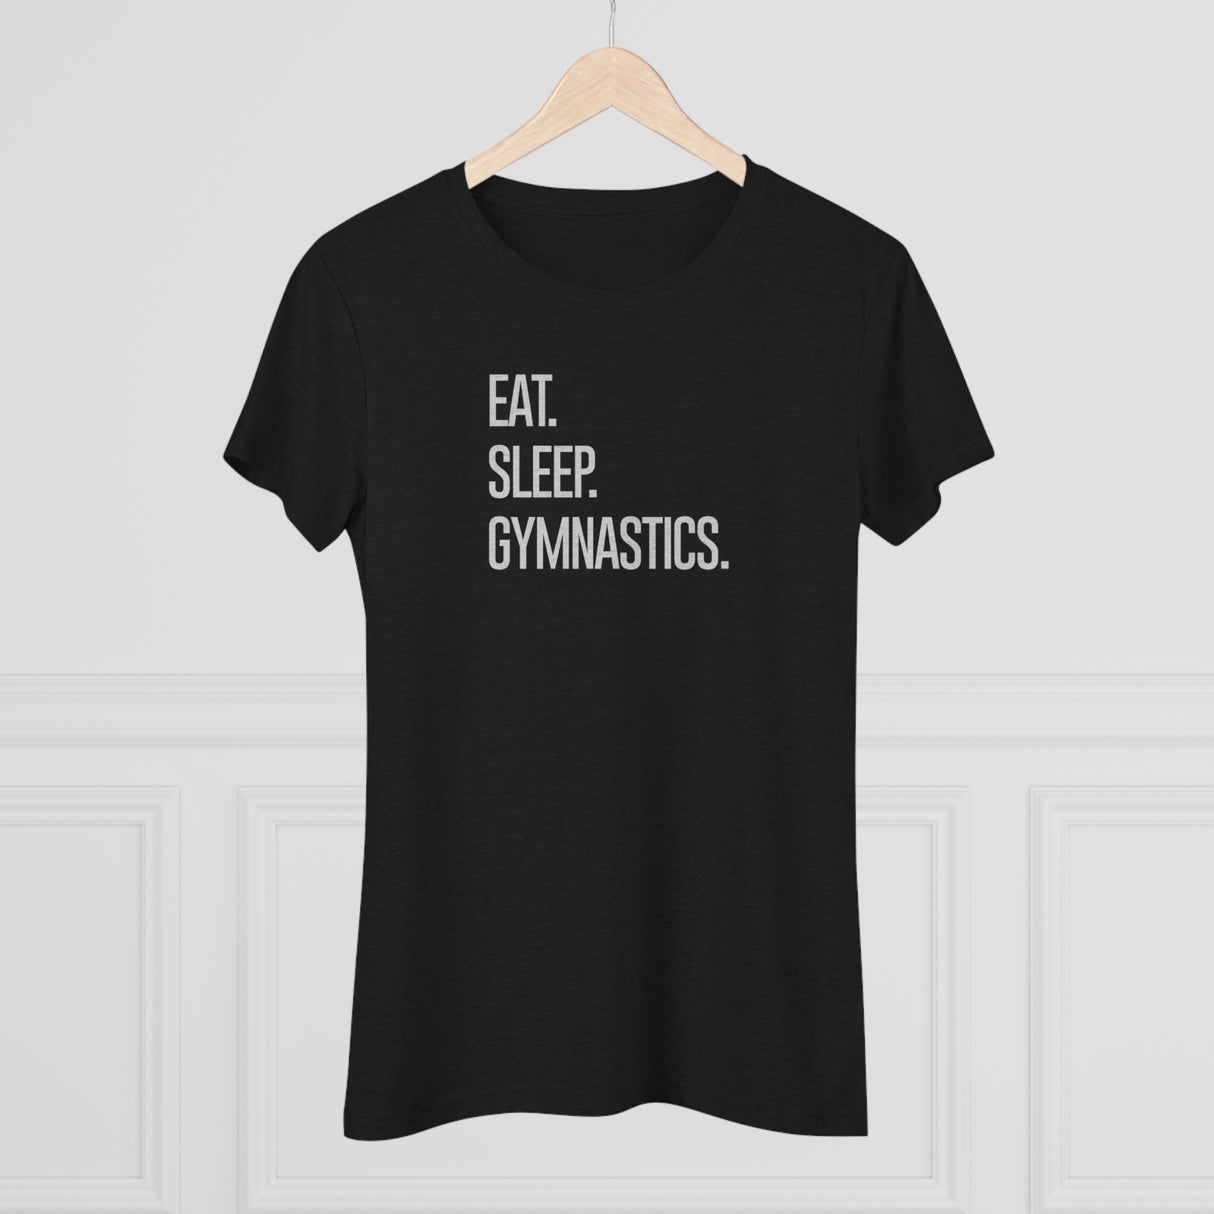 "Eat. Sleep. Gymnastics." T-Shirt (Fitted)